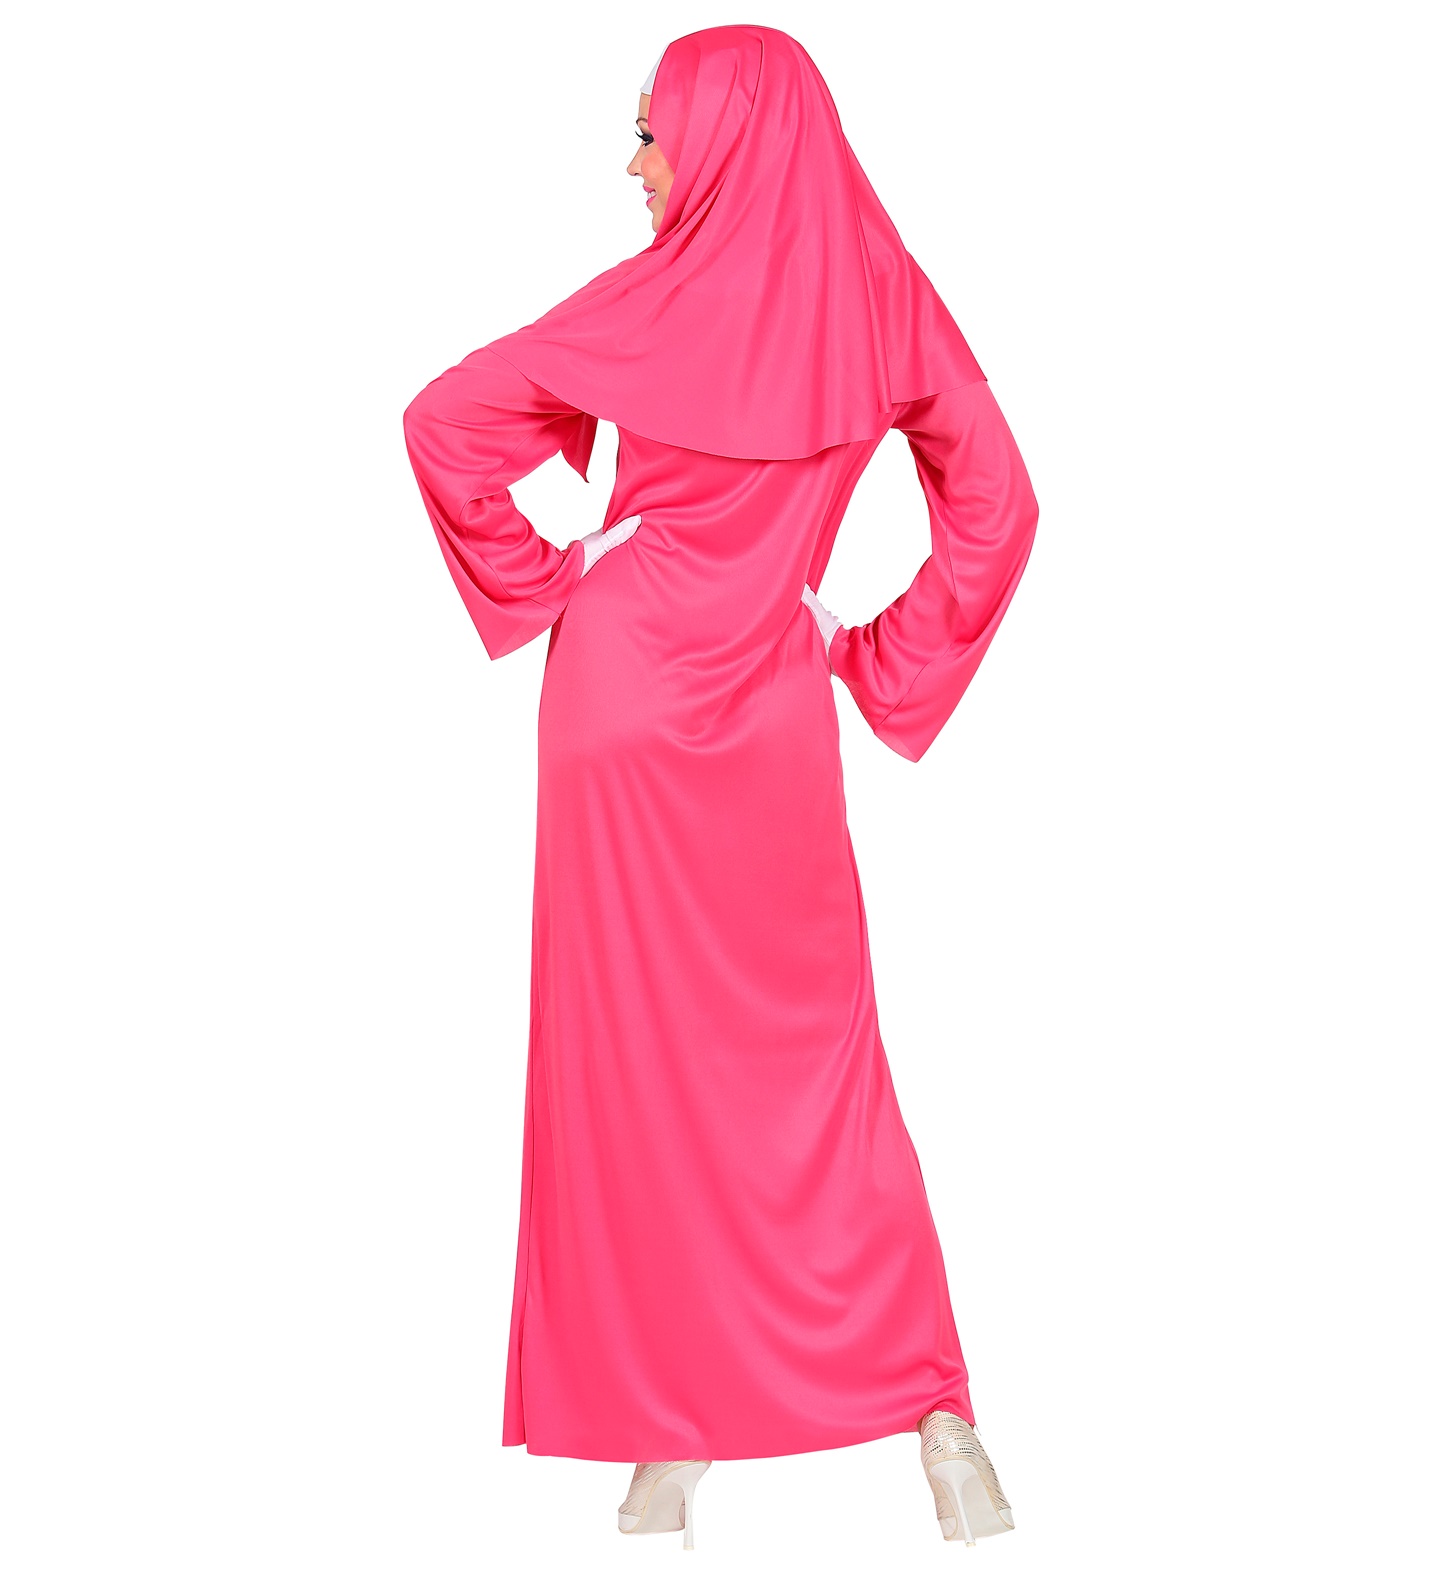 Pink Nun Costume